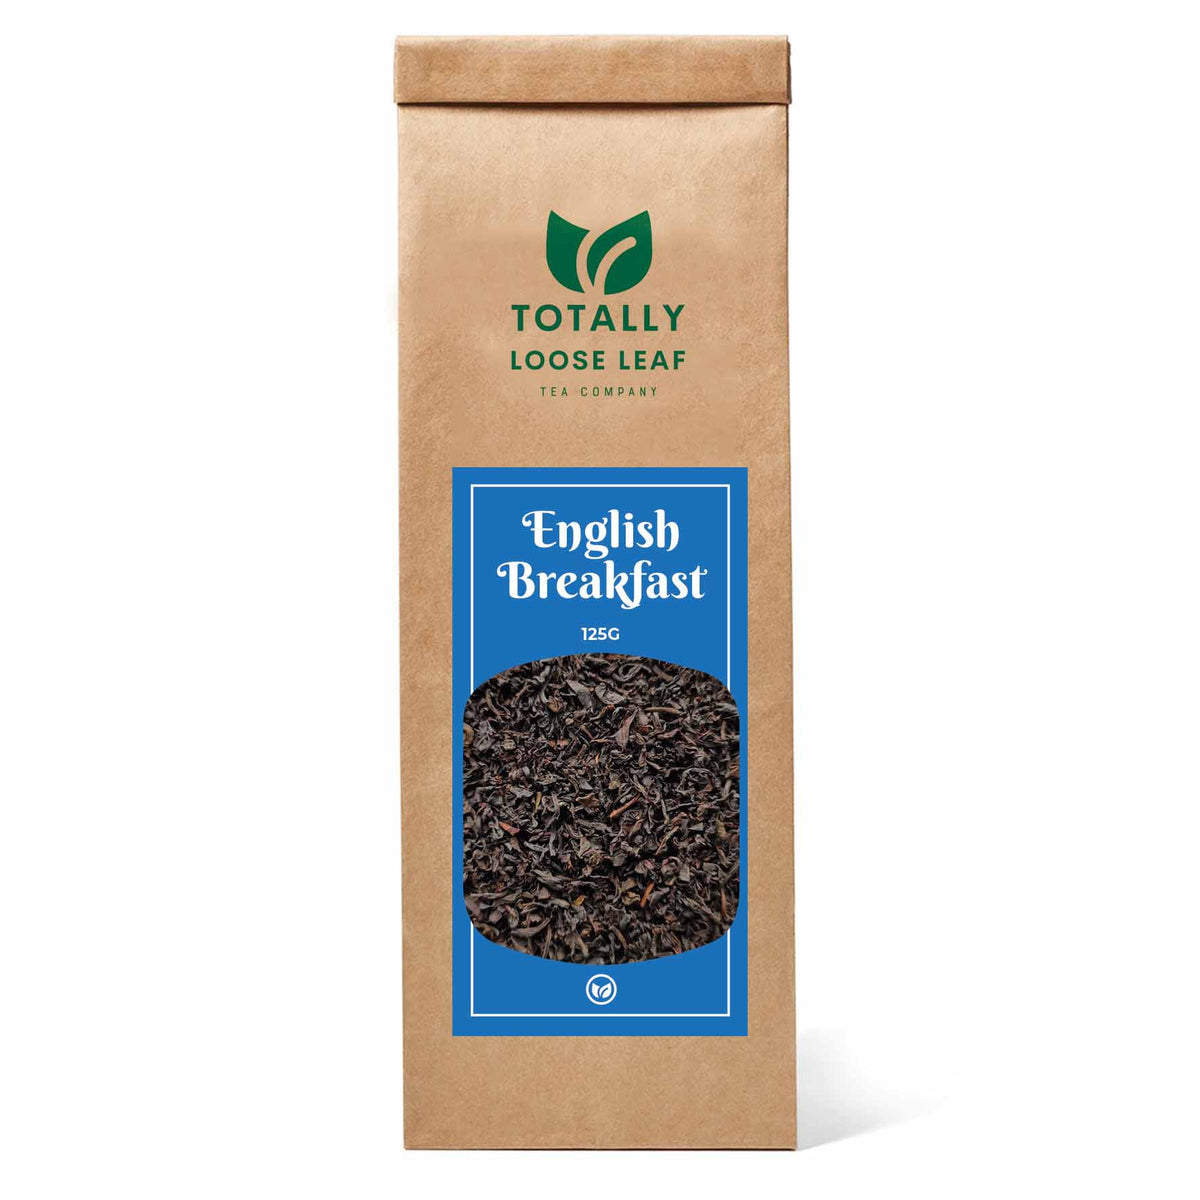 English Breakfast Loose Leaf Tea - one pouch